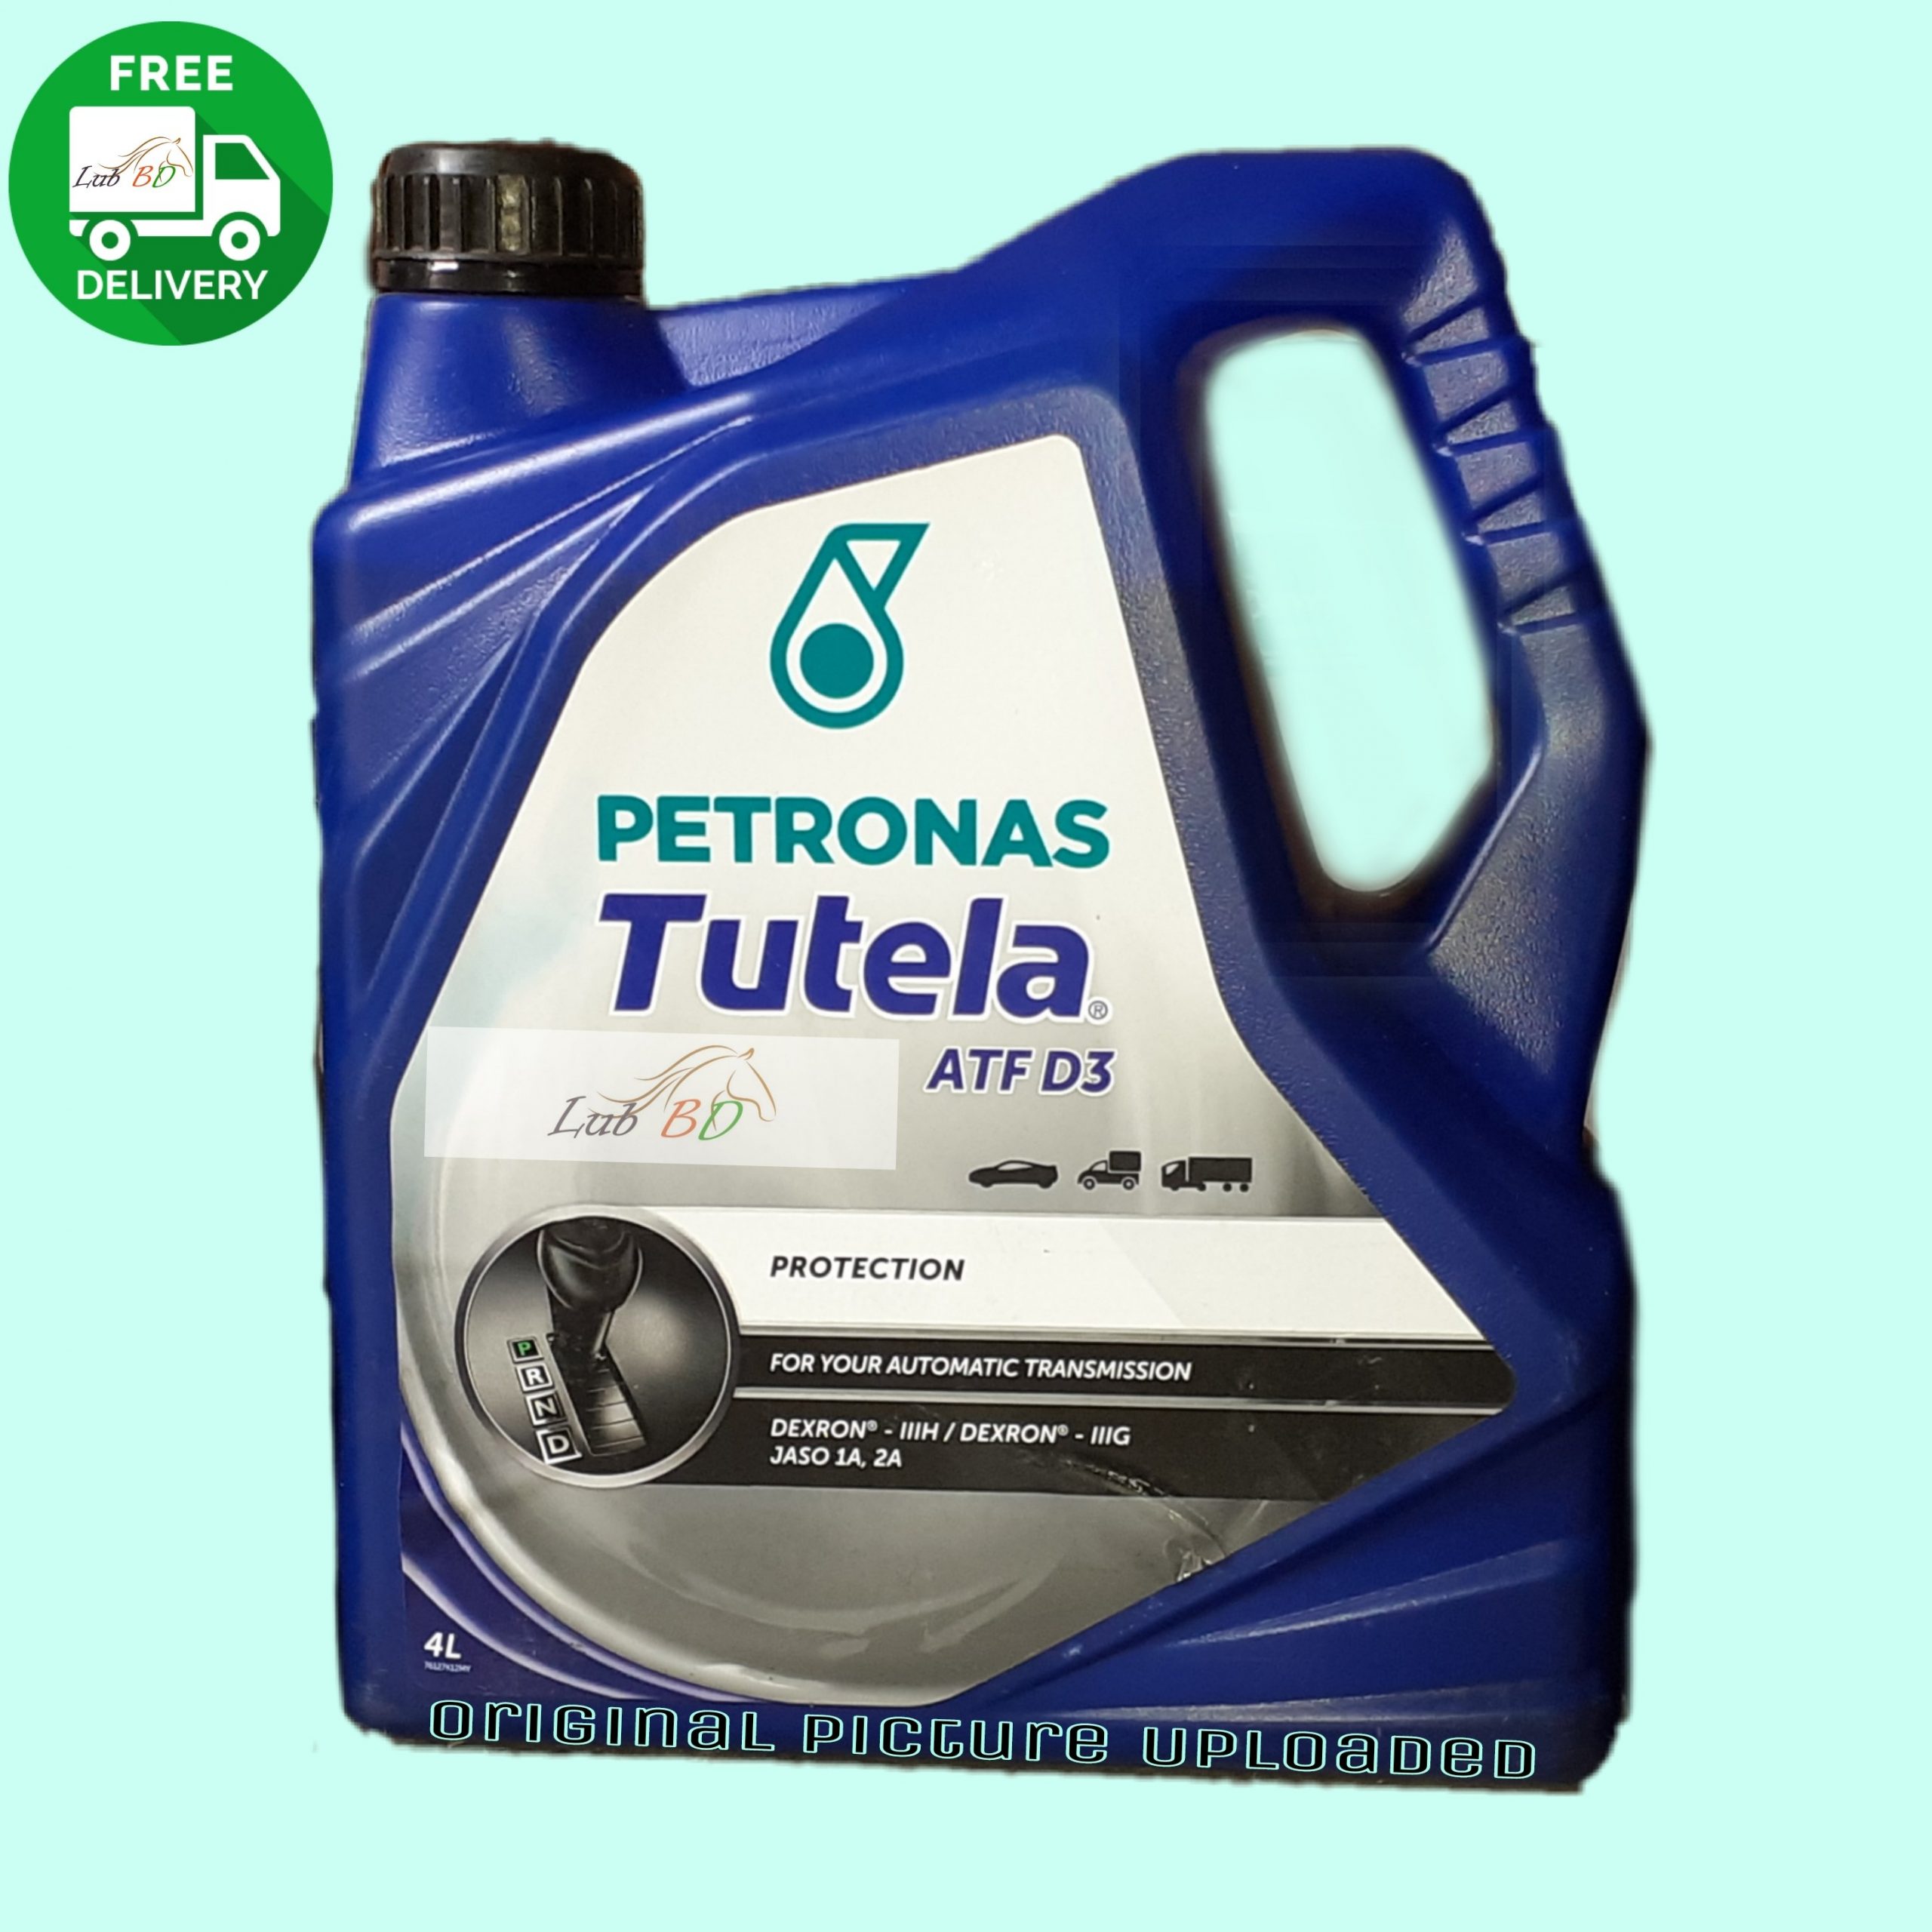 Tutela CS Speed 75w. Трансмиссионное масло Petronas tutela. Масло трансмиссионное Петронас Тутела трансмиссионное 75w90. Трансмиссионное масло Petronas tutela Axel 300 80w90.